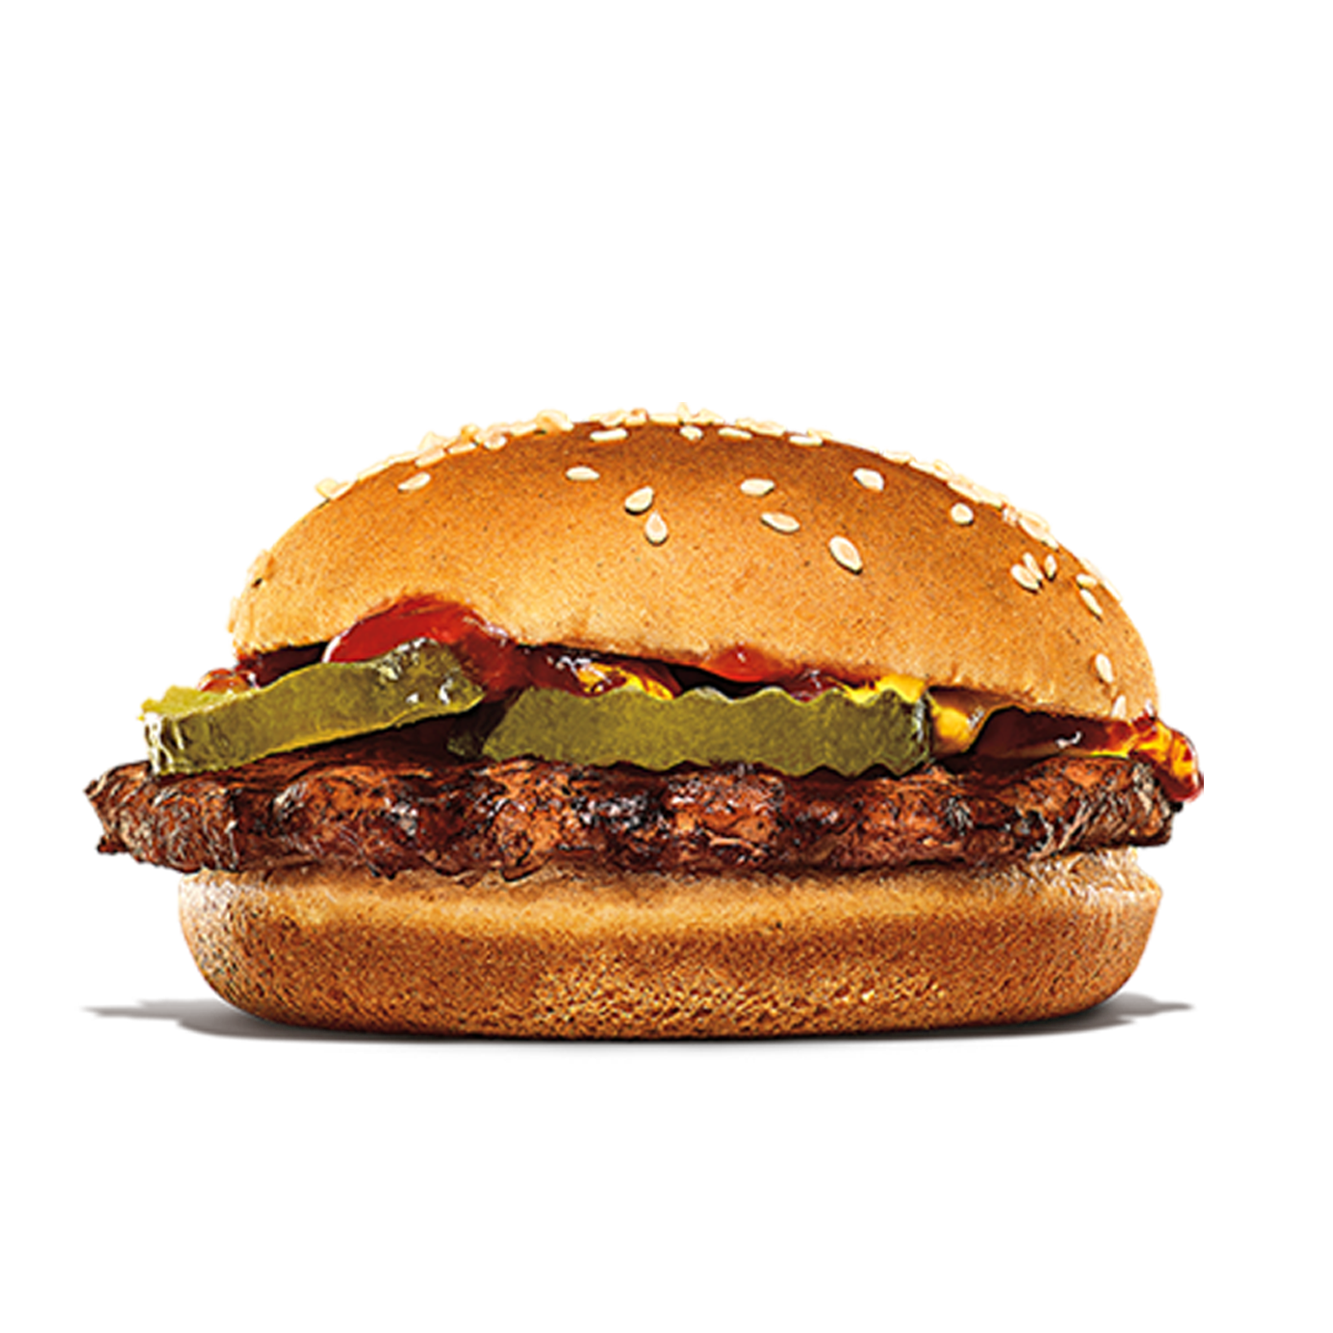 Burger King Sioux Falls (605)215-5531